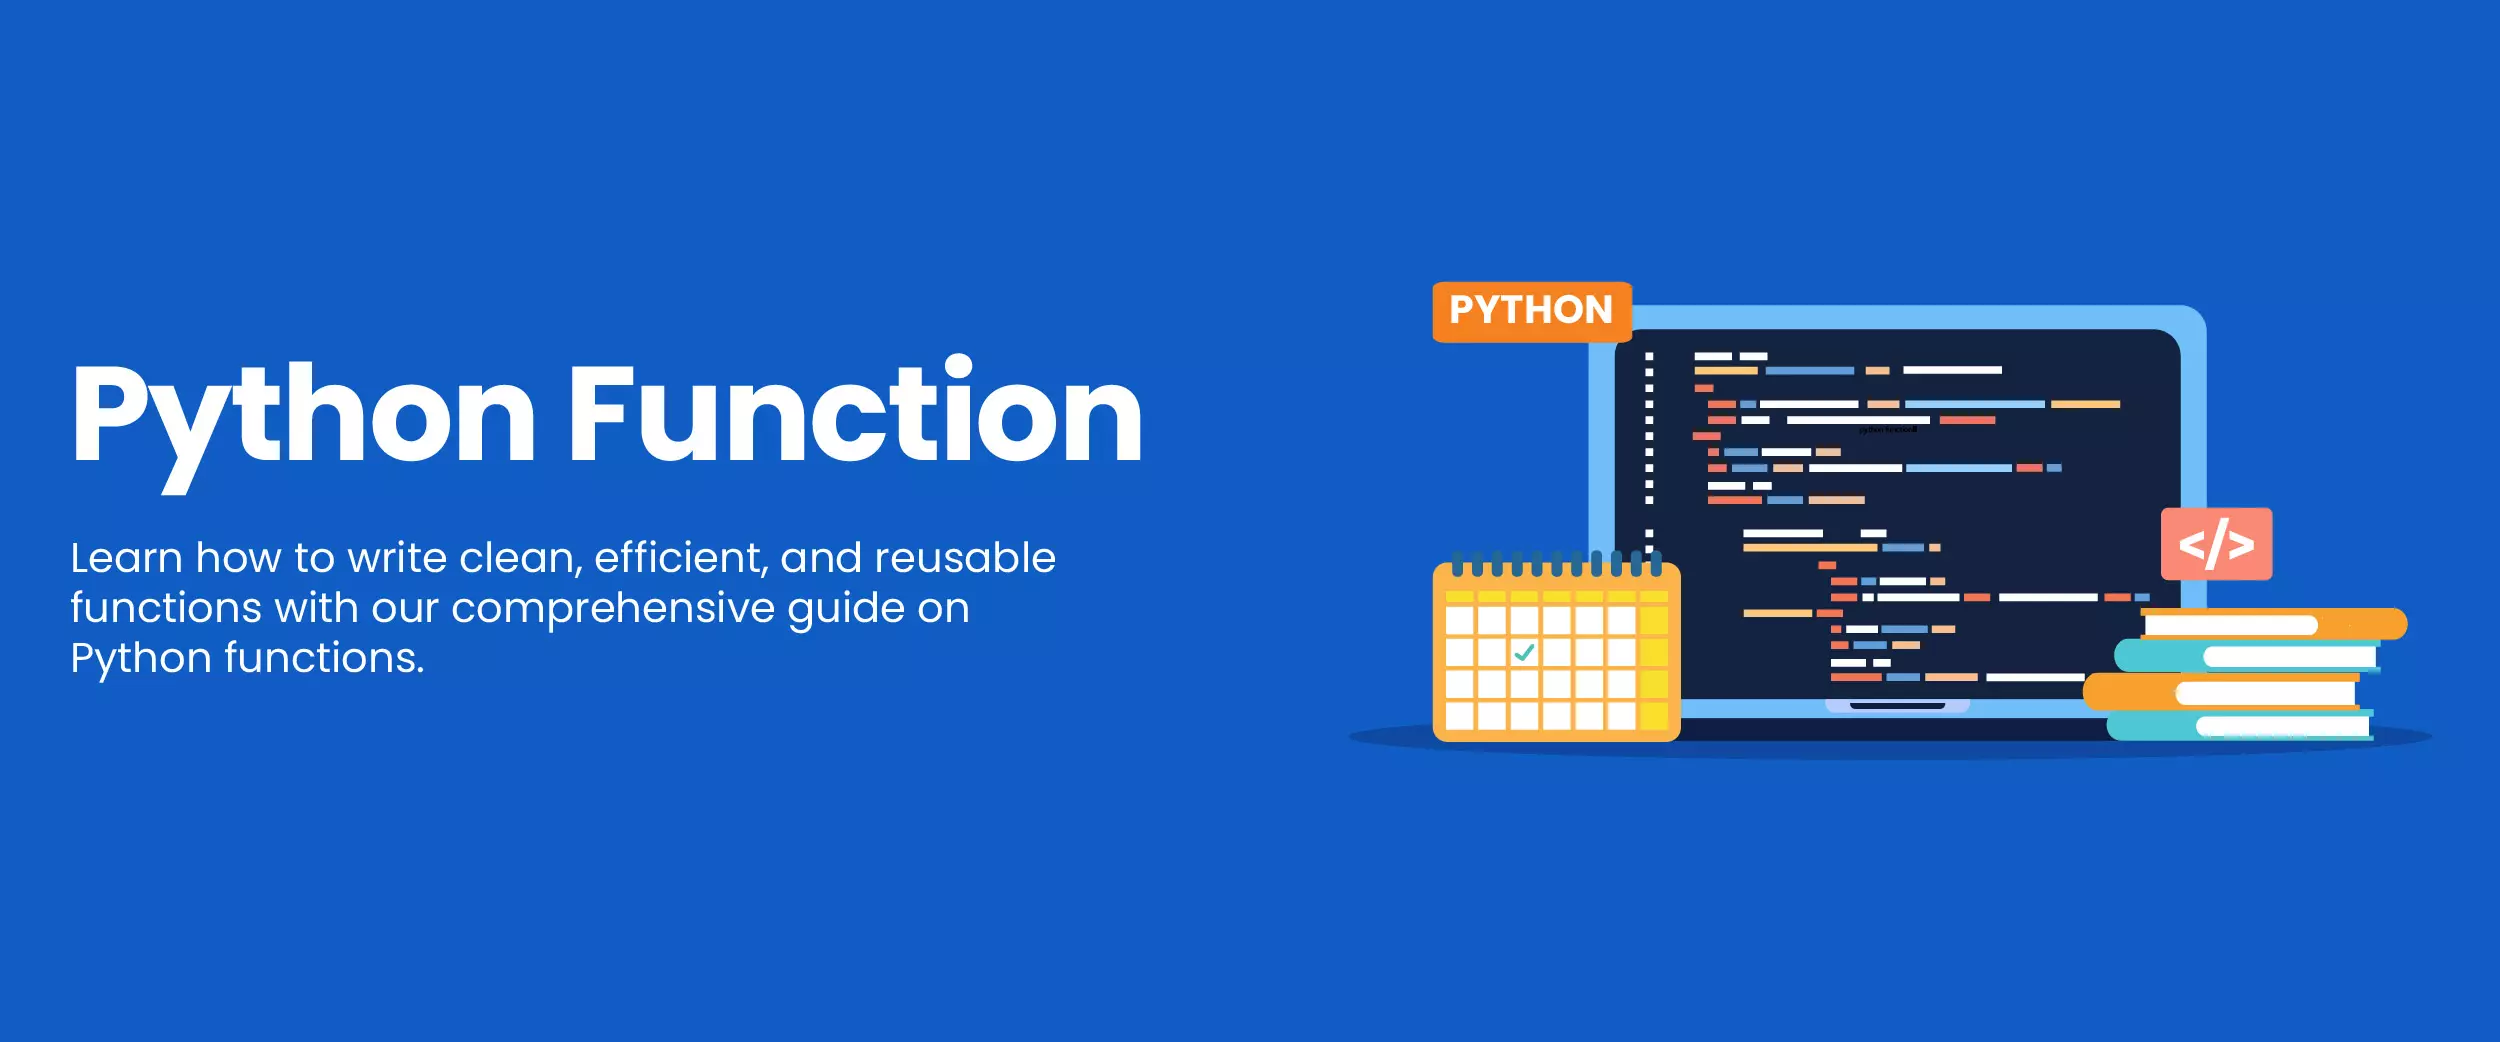 Python function return multiple values